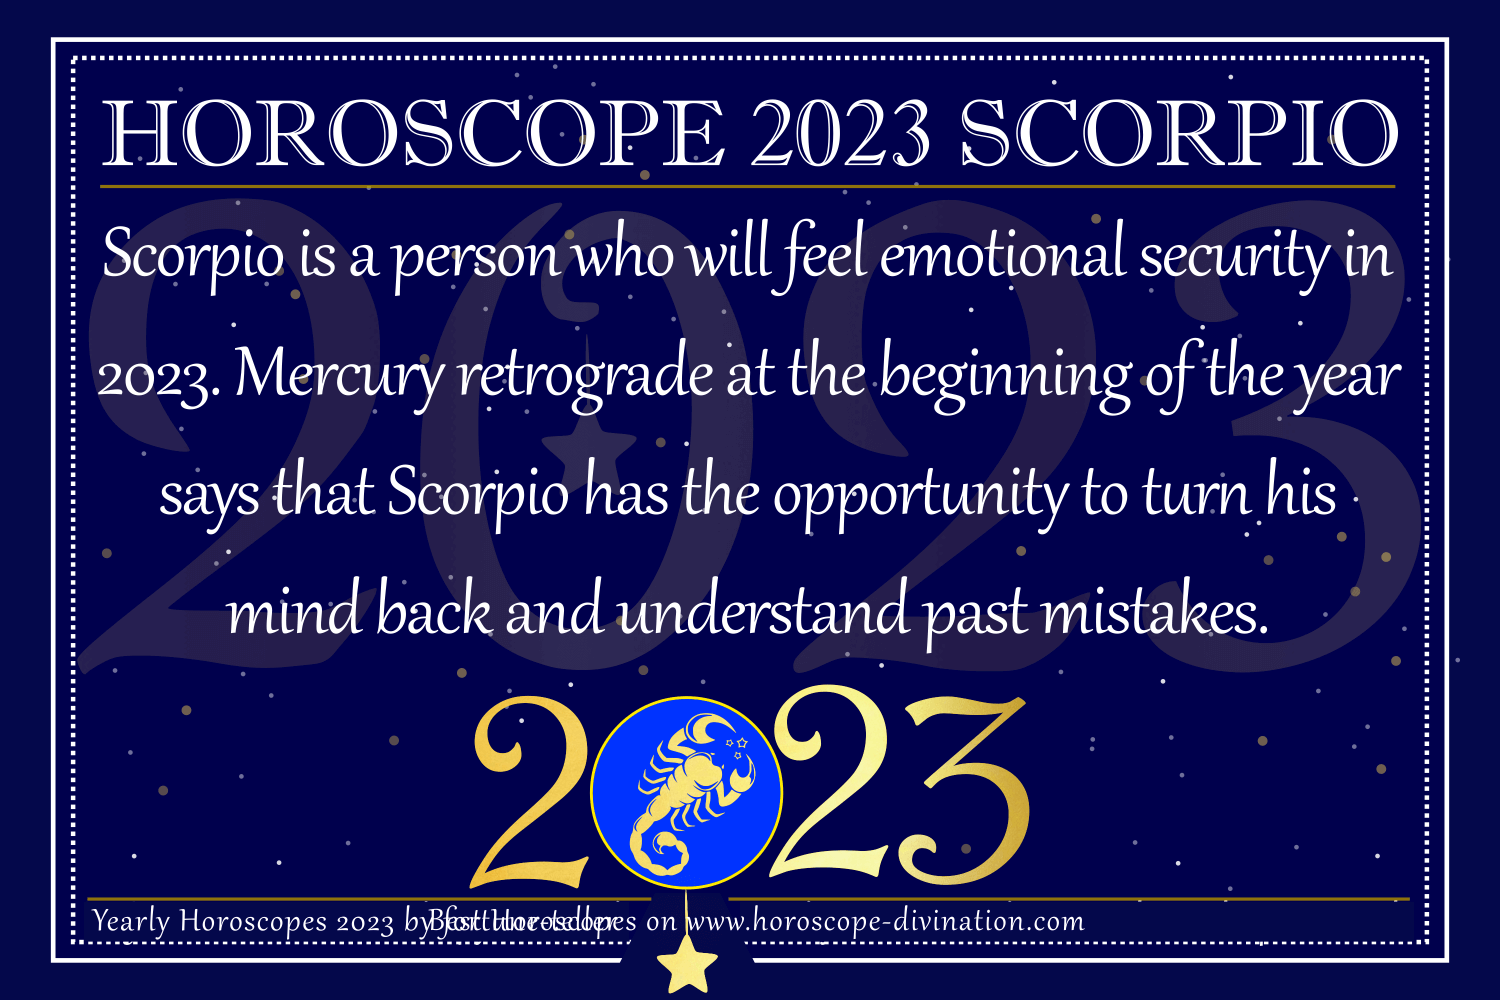 Horoscope2023scorpio 